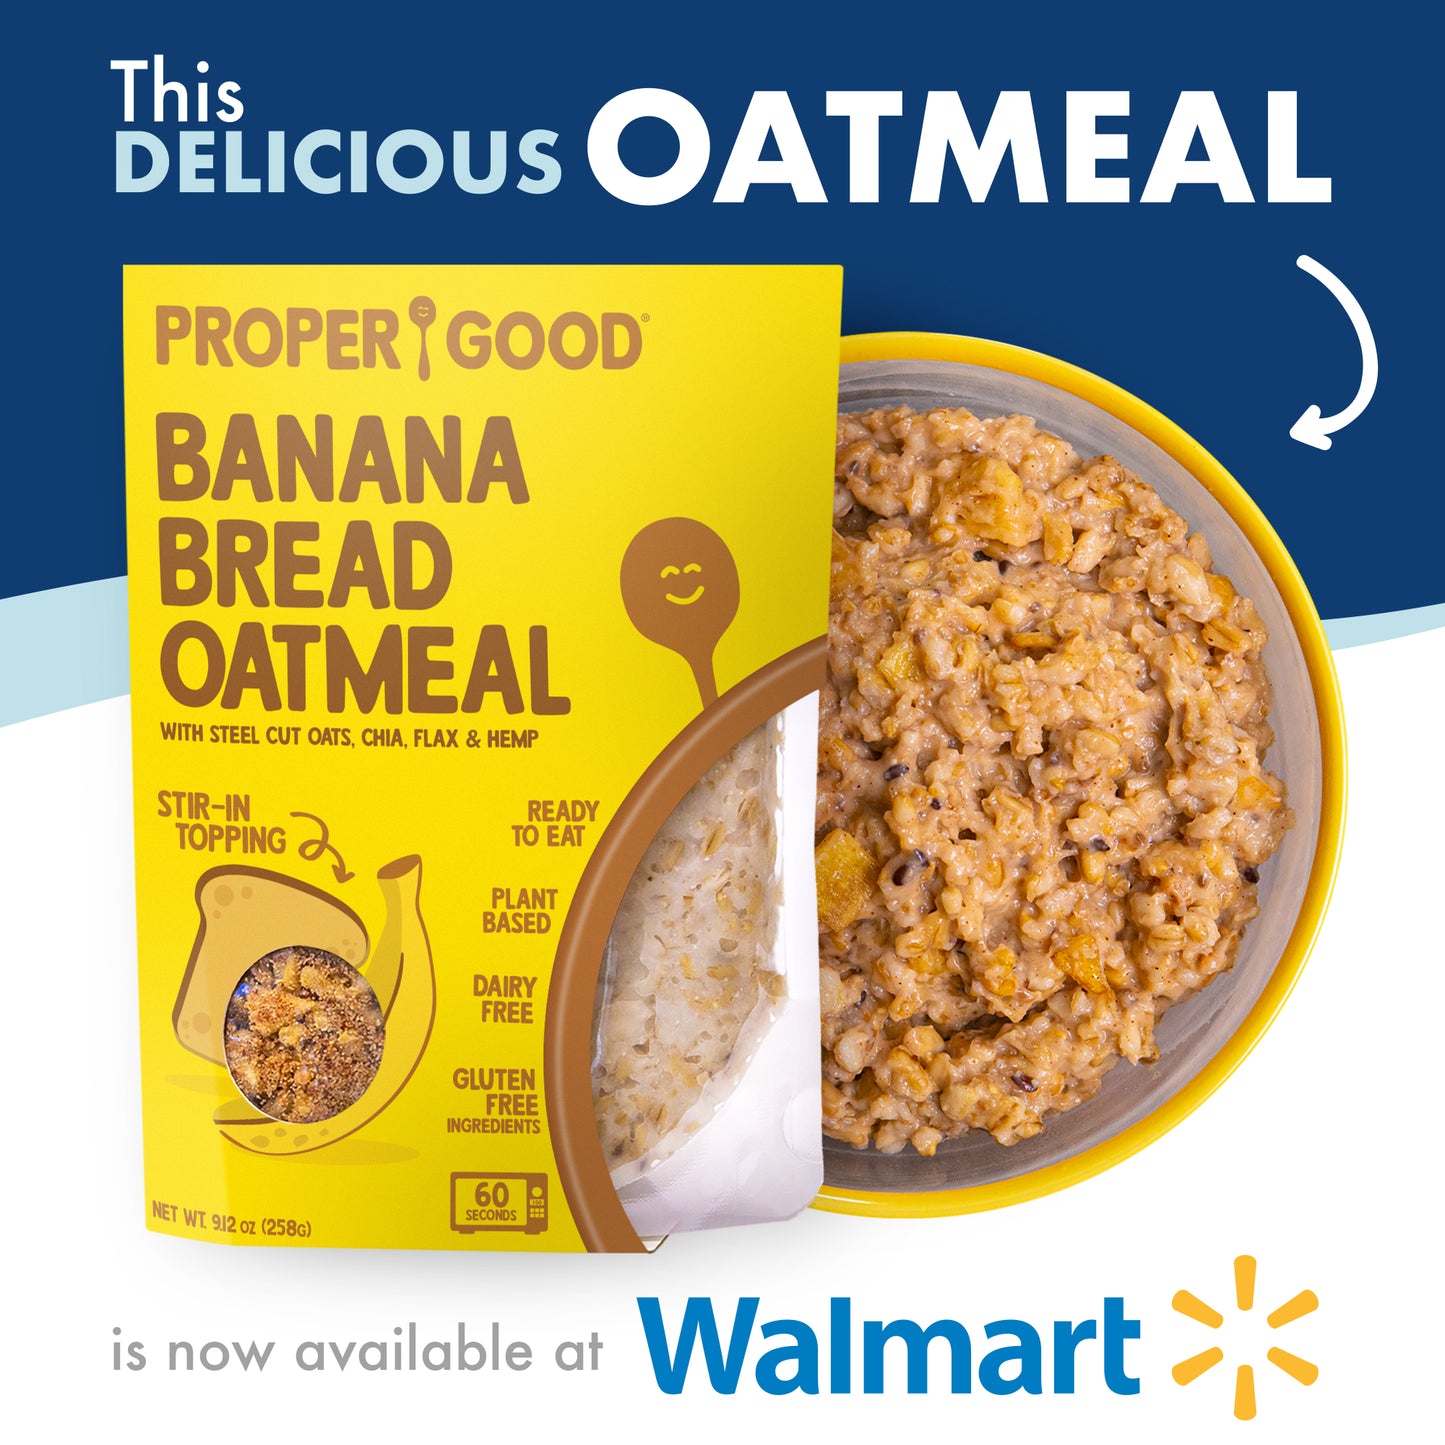 Banana Bread Oatmeal available in Walmart - Eat Proper Good